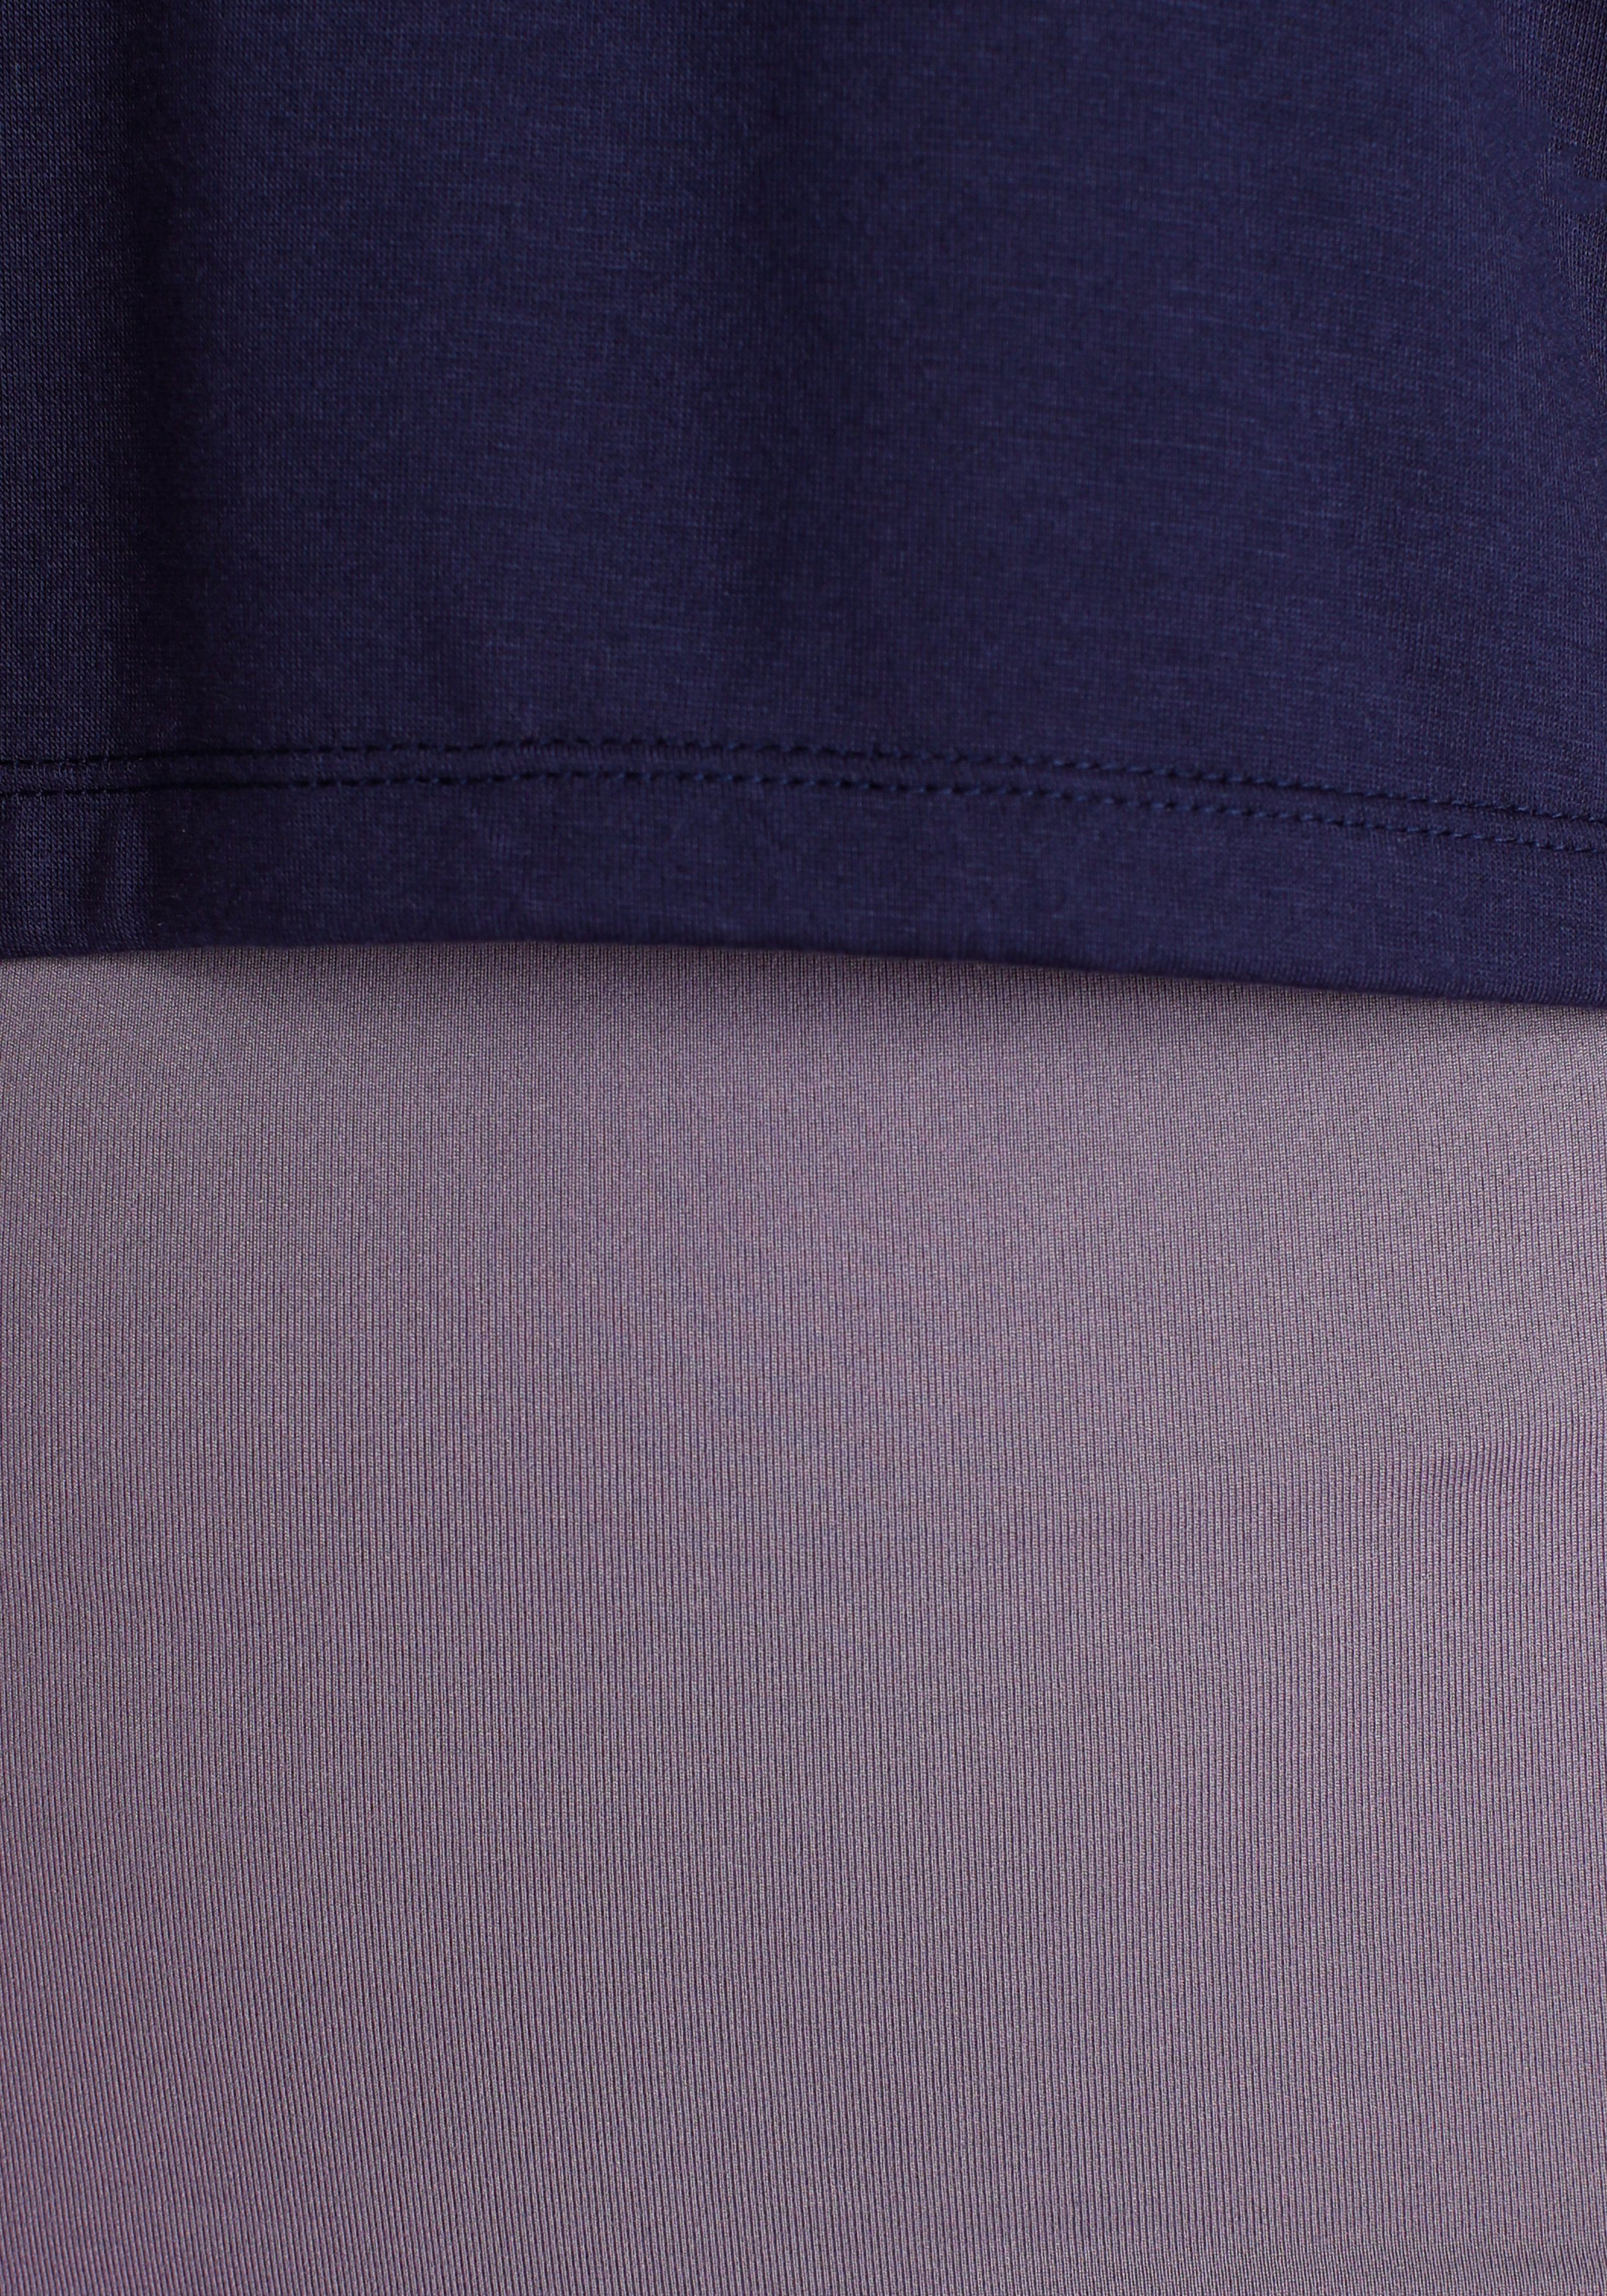 FAYN SPORTS T-Shirt Cropped Top 2-tlg) navy-purple (Set